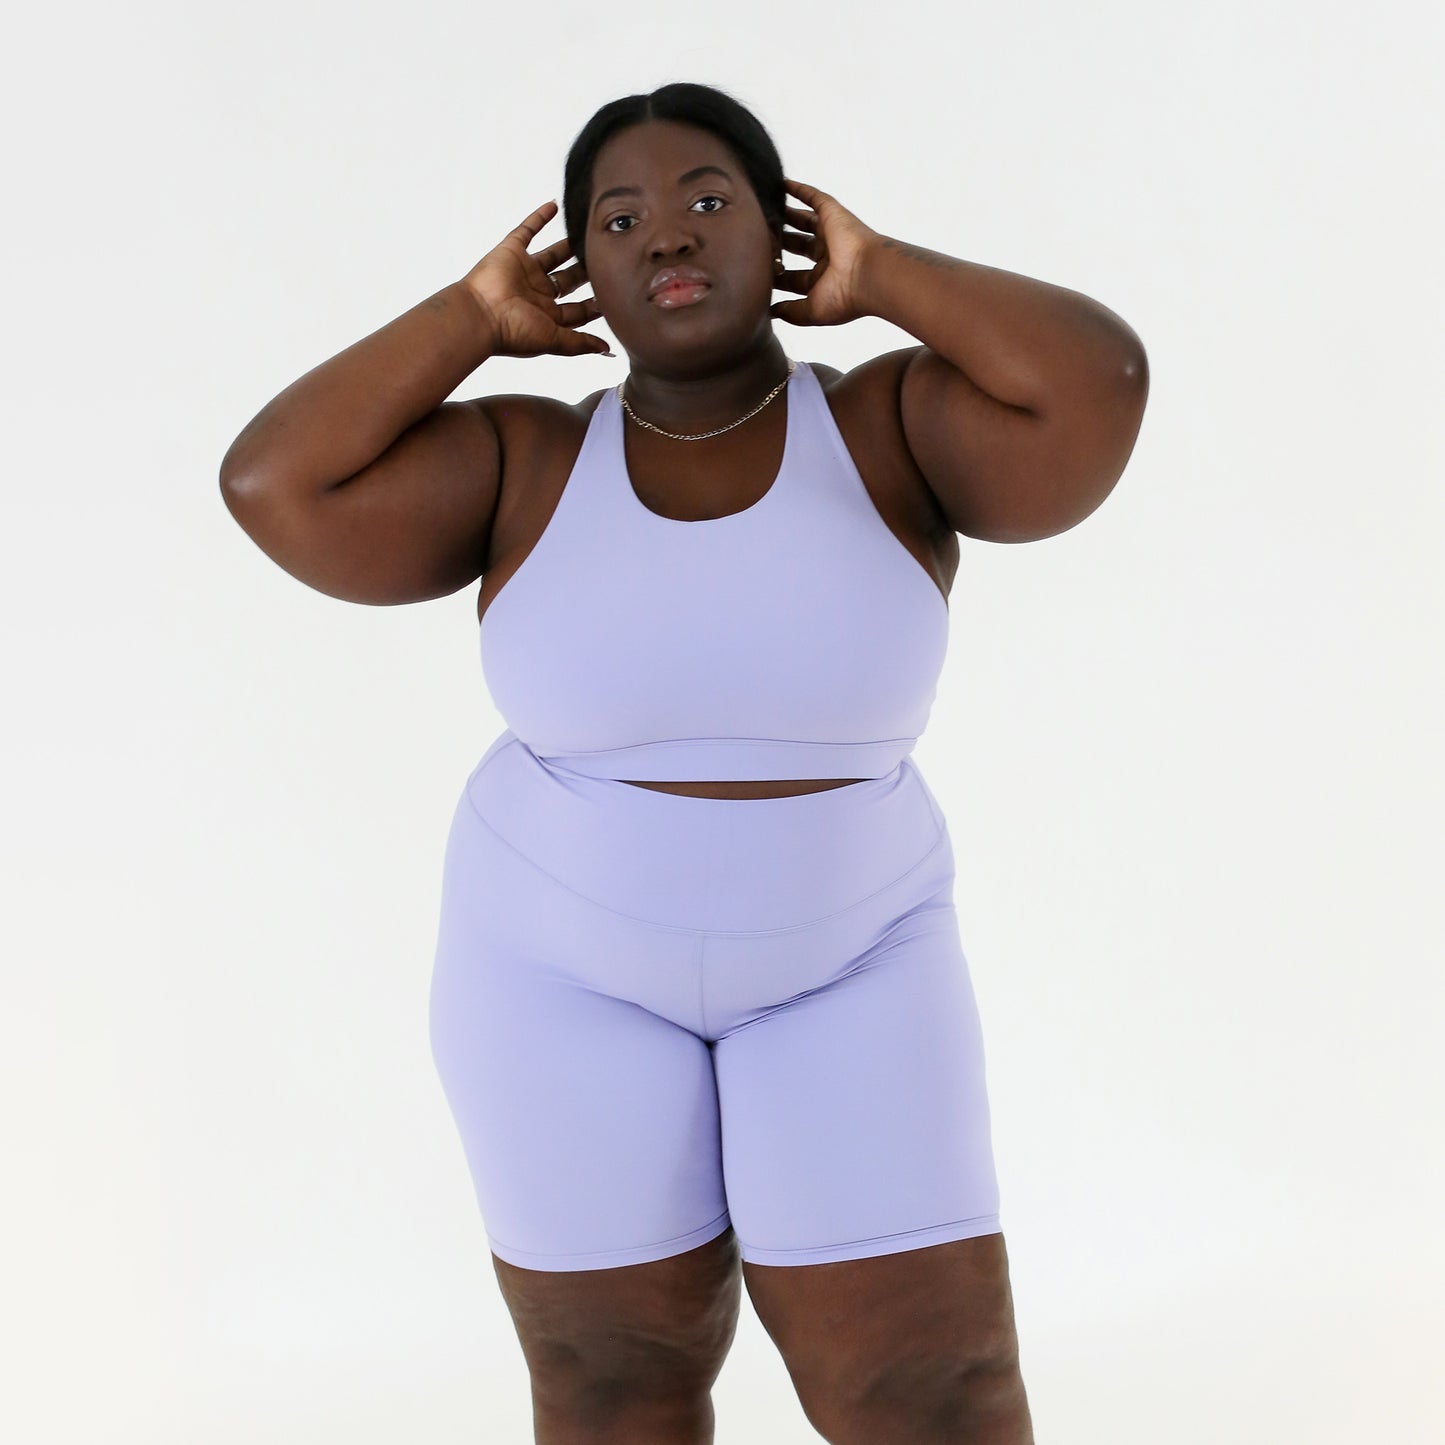 Celer high neck sports bra + shorts try on haul ☁️🌸💓 The new